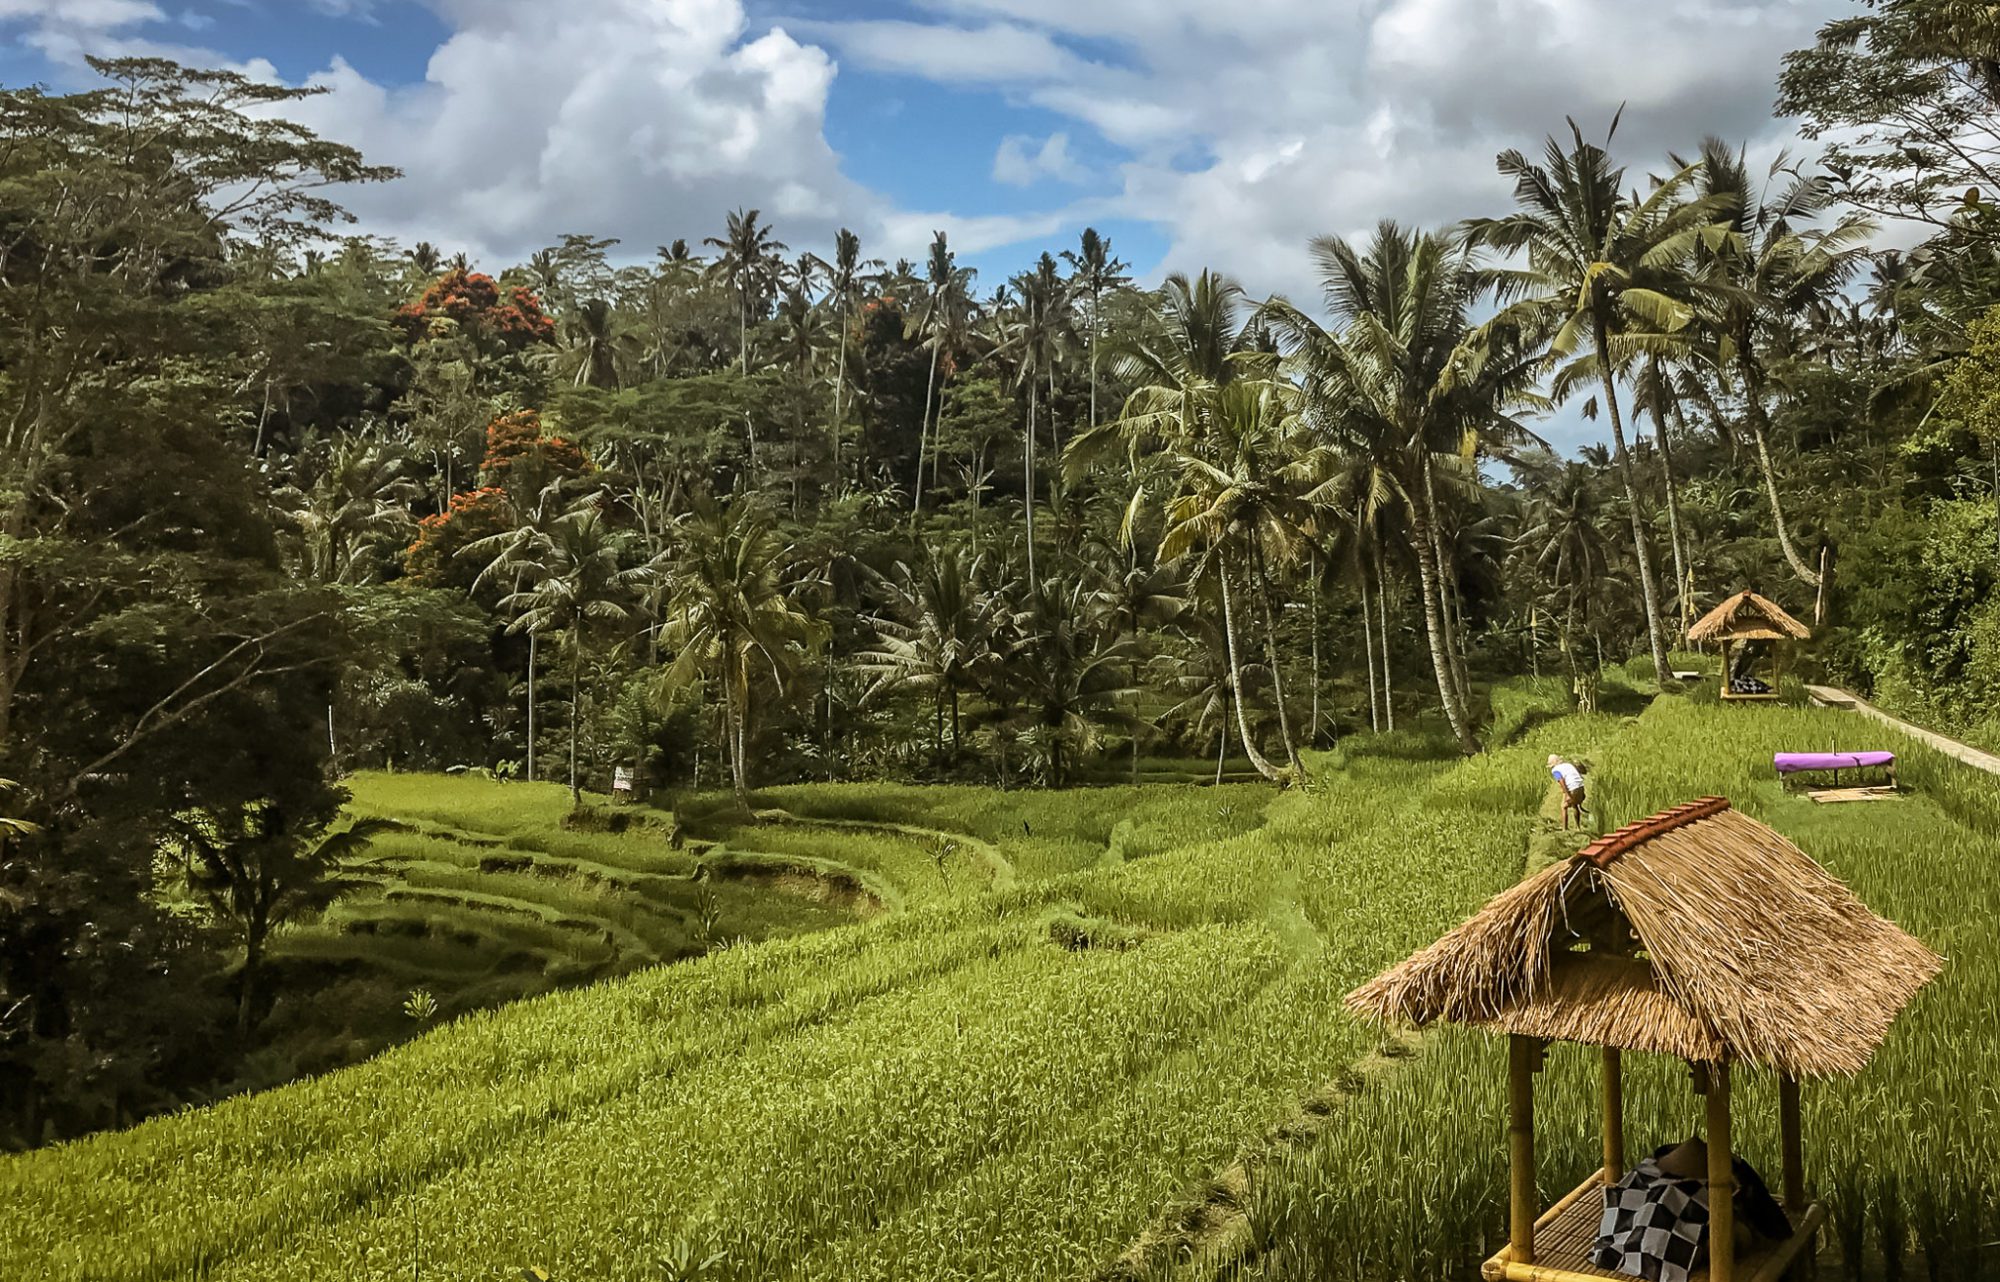 Rice Fields in Bali Indonesia